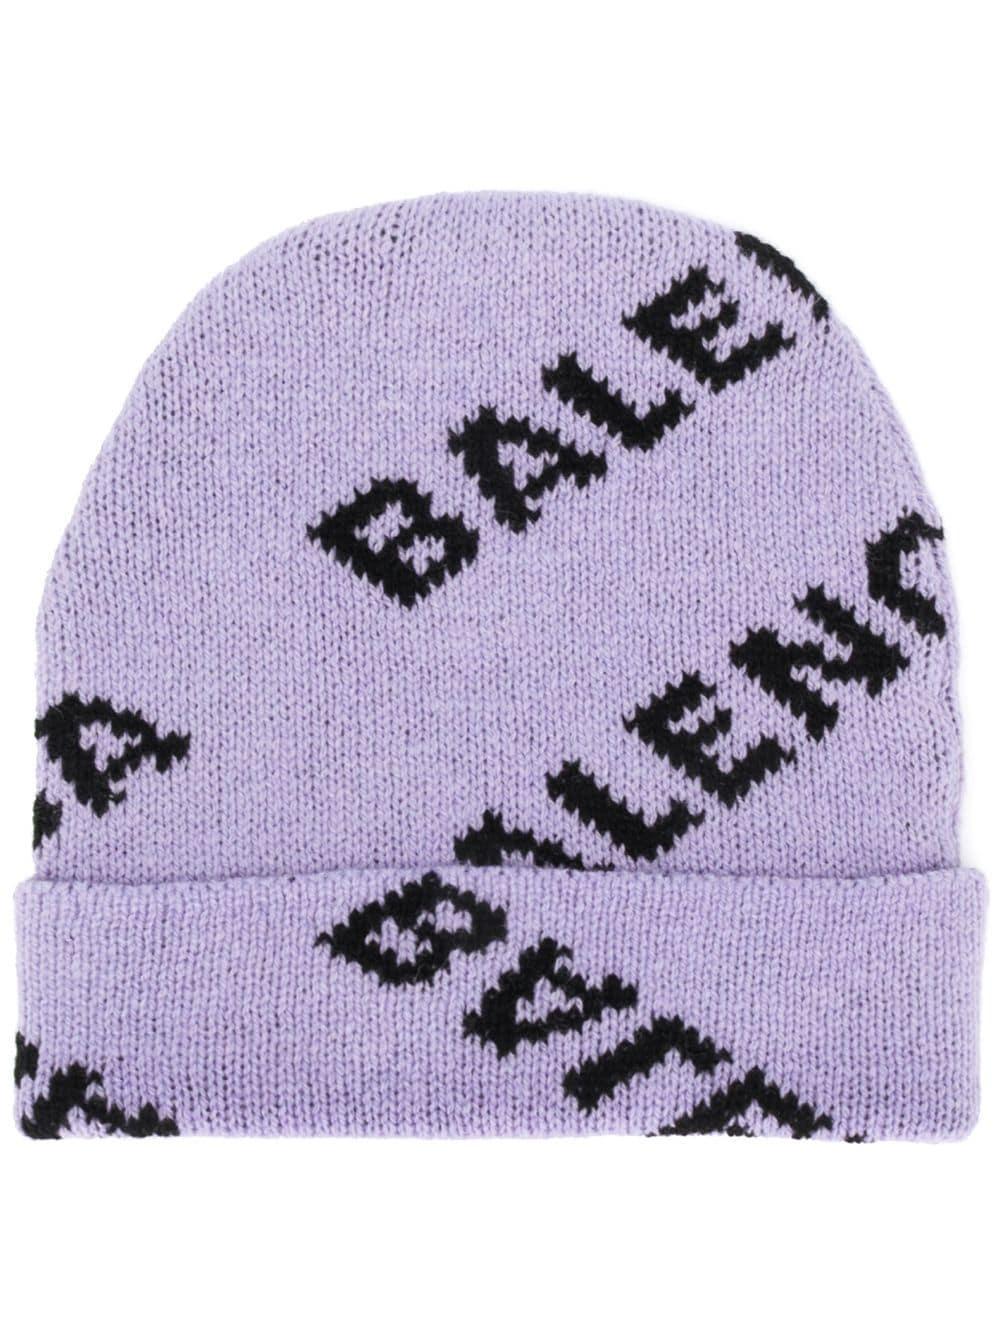 Balenciaga Wool Logo Beanie in Lilac/Black (Purple) - Lyst